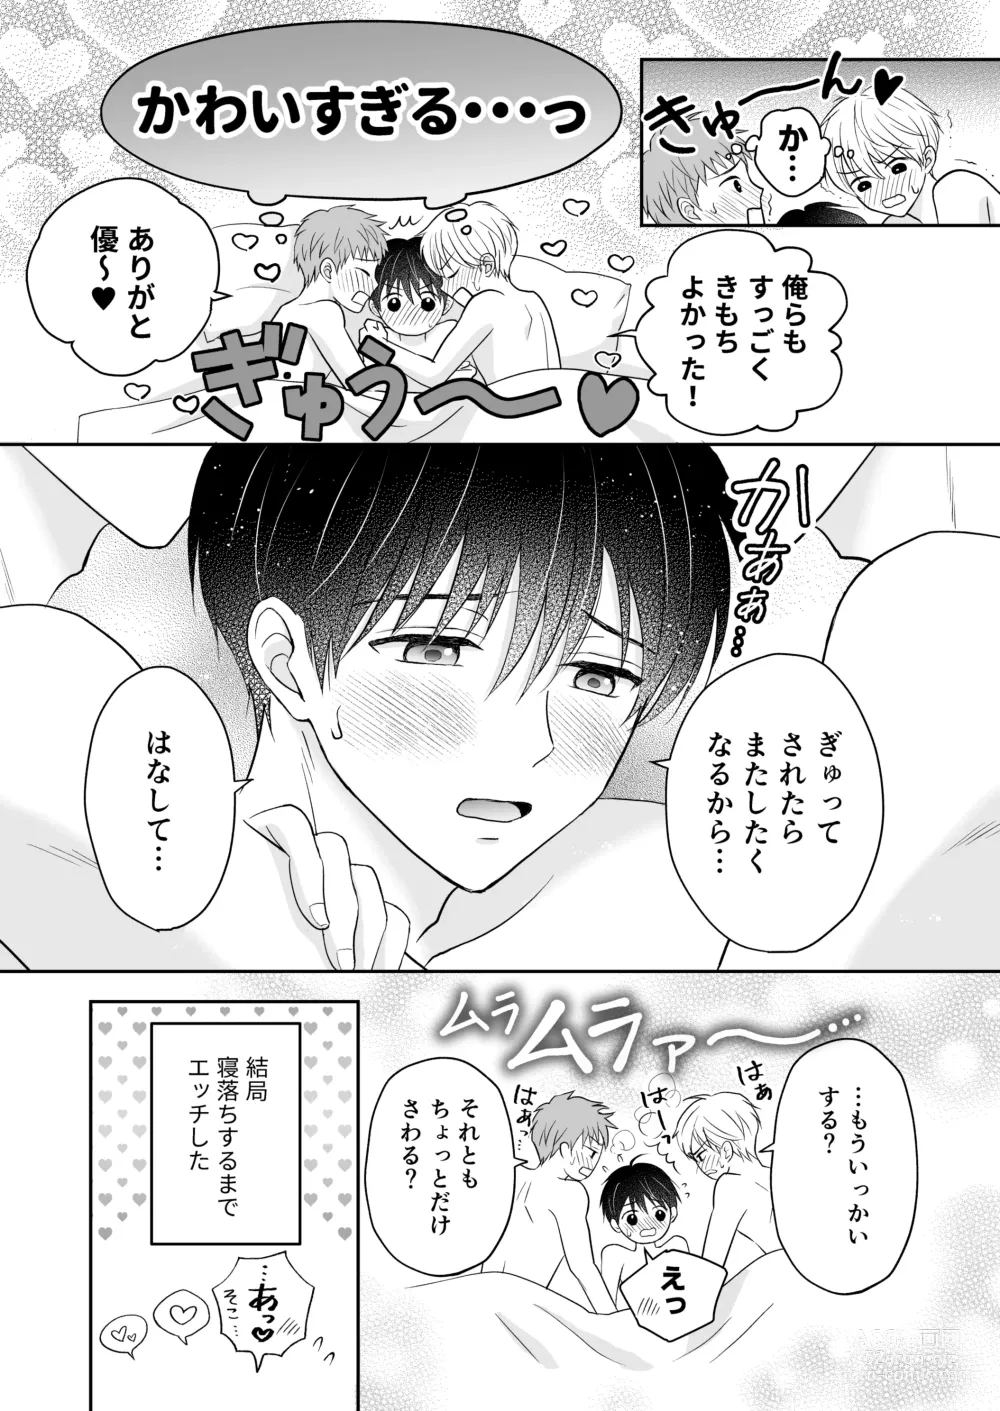 Page 36 of doujinshi 3-nin wa Nakayoshi